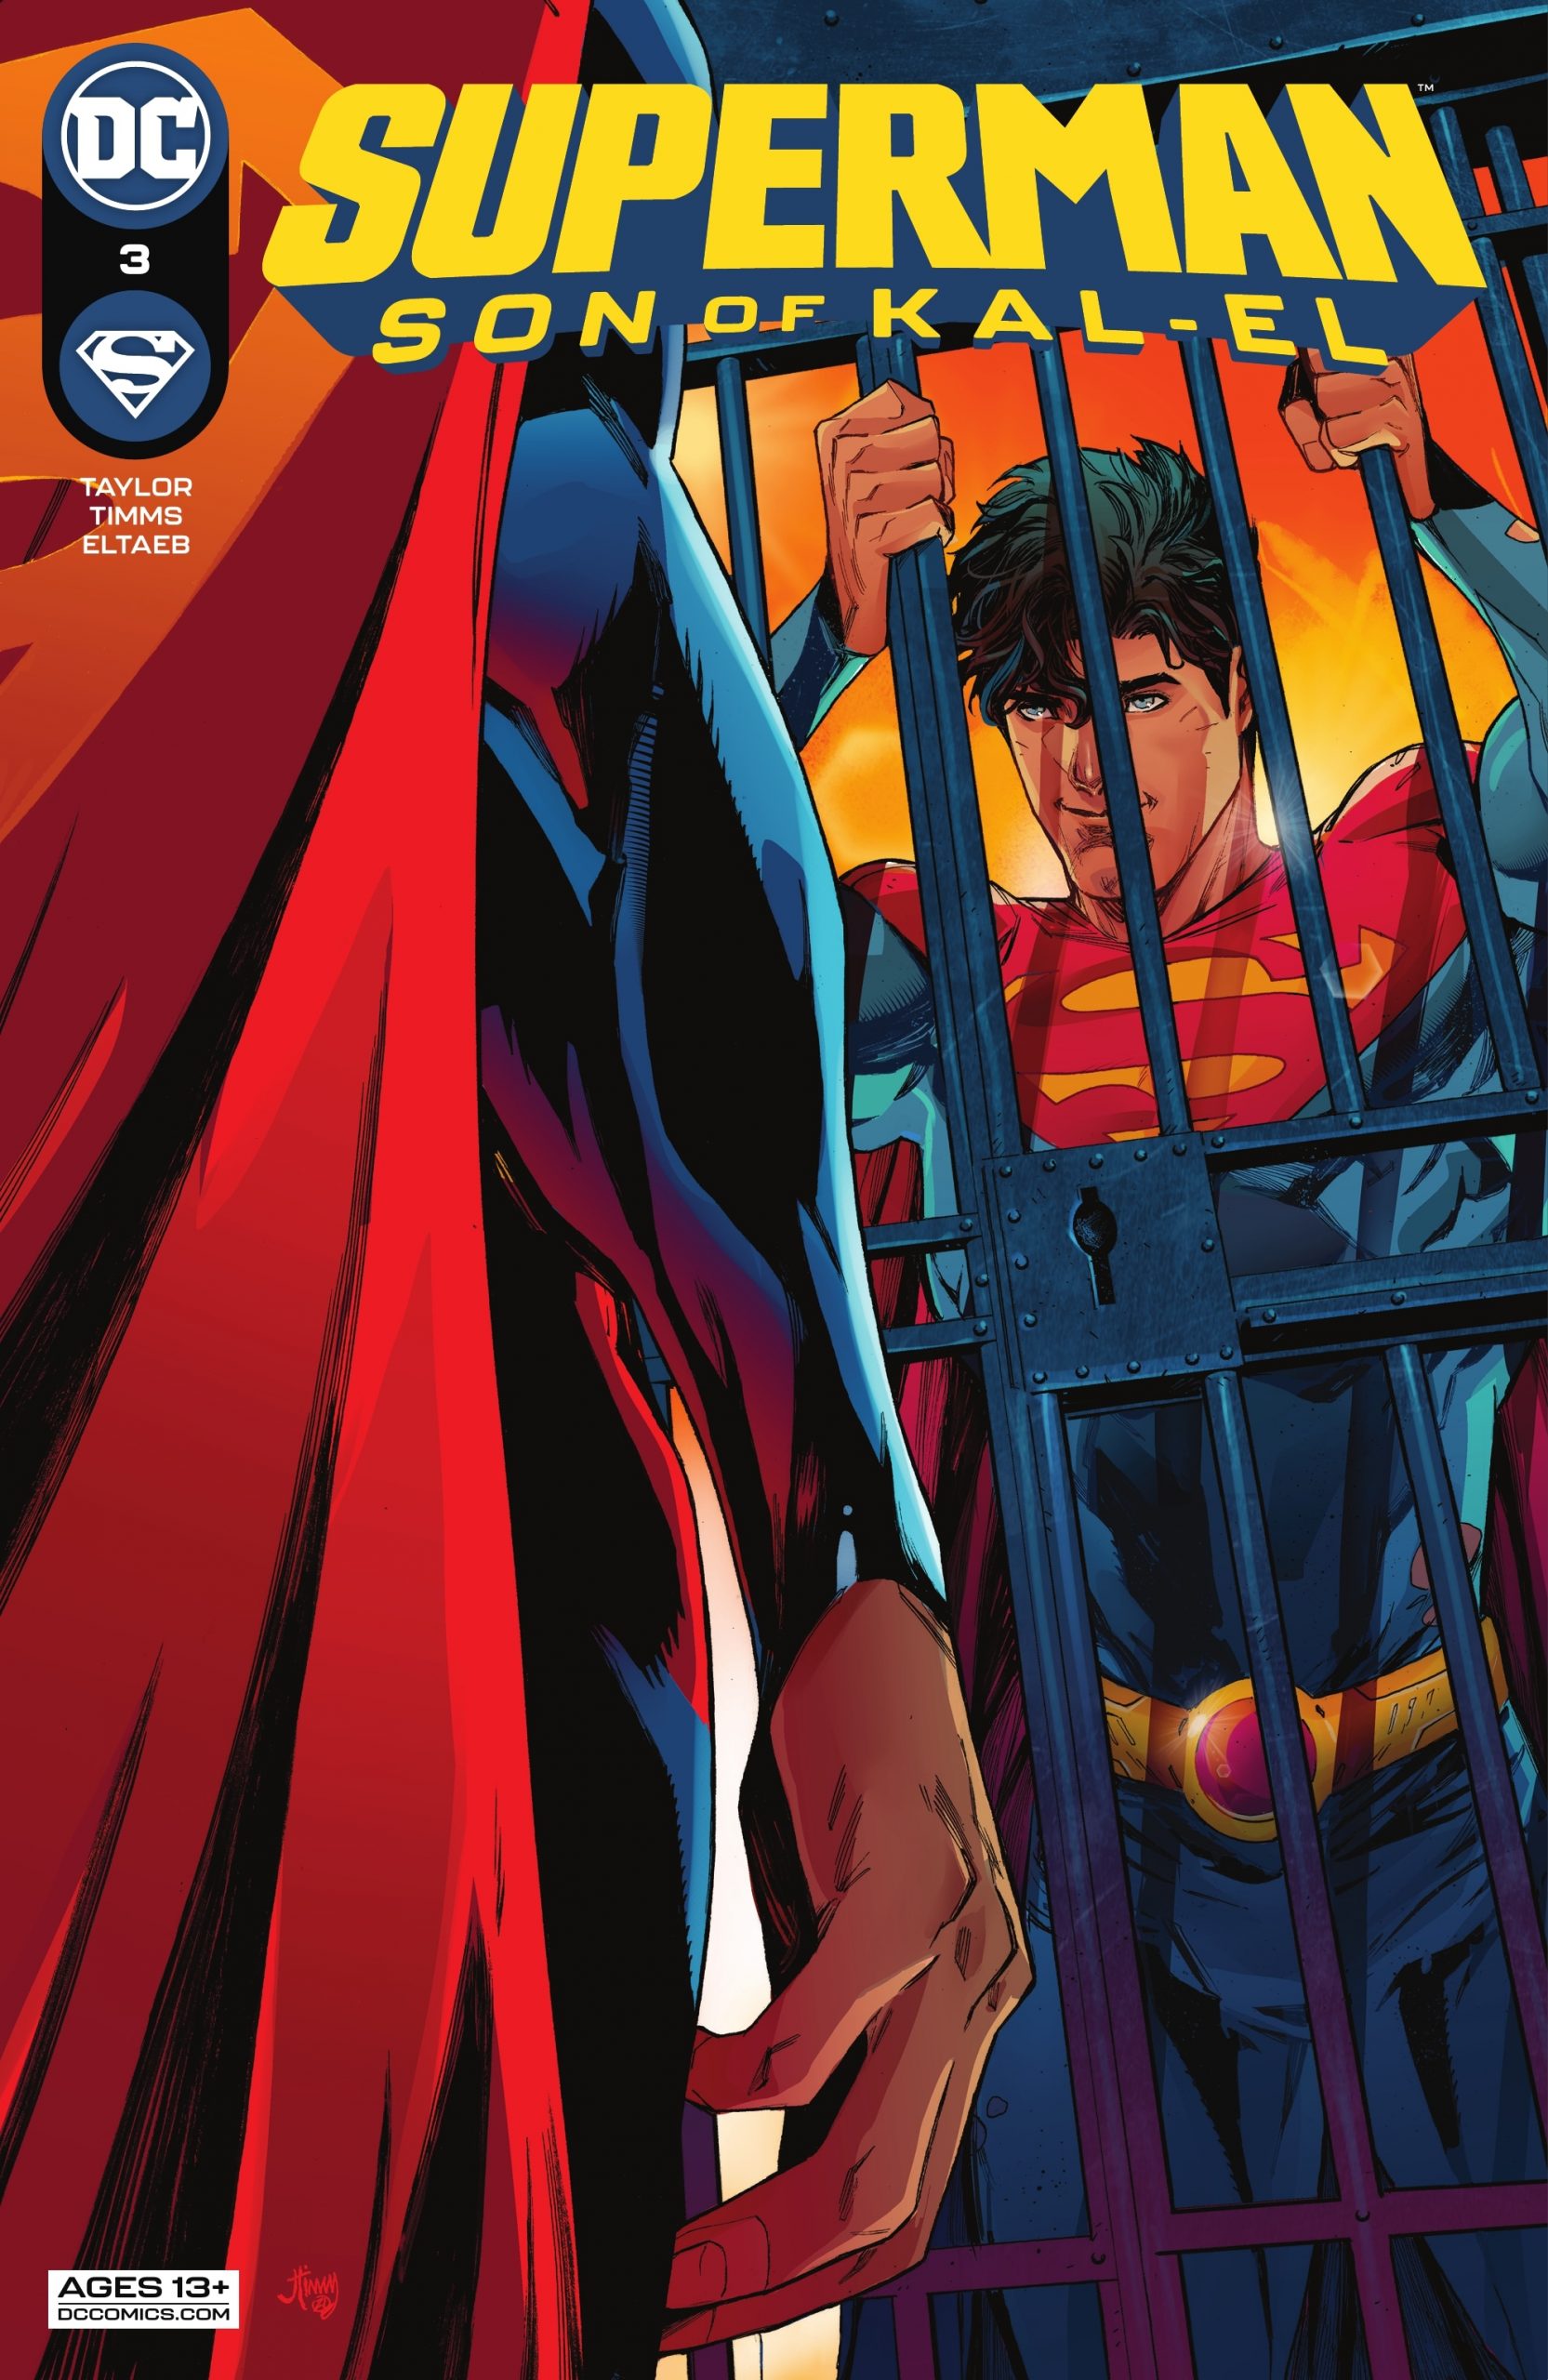 https://langgeek.net/wp-content/uploads/2021/12/Superman-Son-of-Kal-El-2021-003-000-scaled.jpg